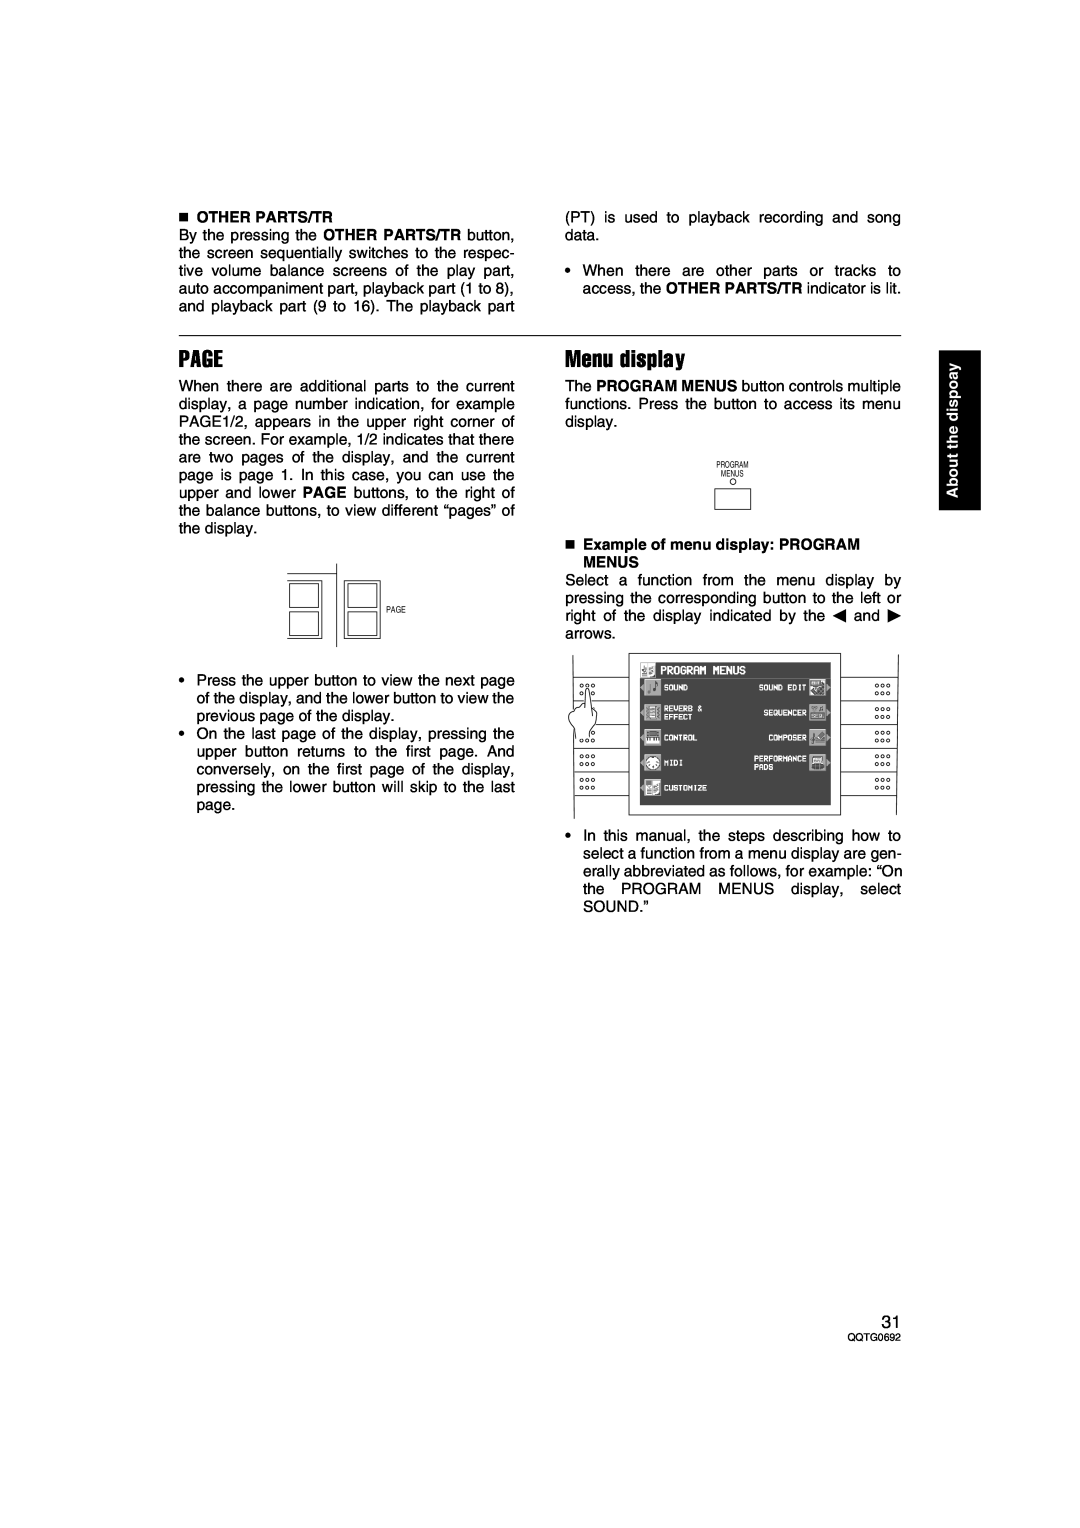 Panasonic SX-KN2400 manual Page, Menu display, Other Parts/Tr, Example of menu display PROGRAM MENUS, About the dispoay 